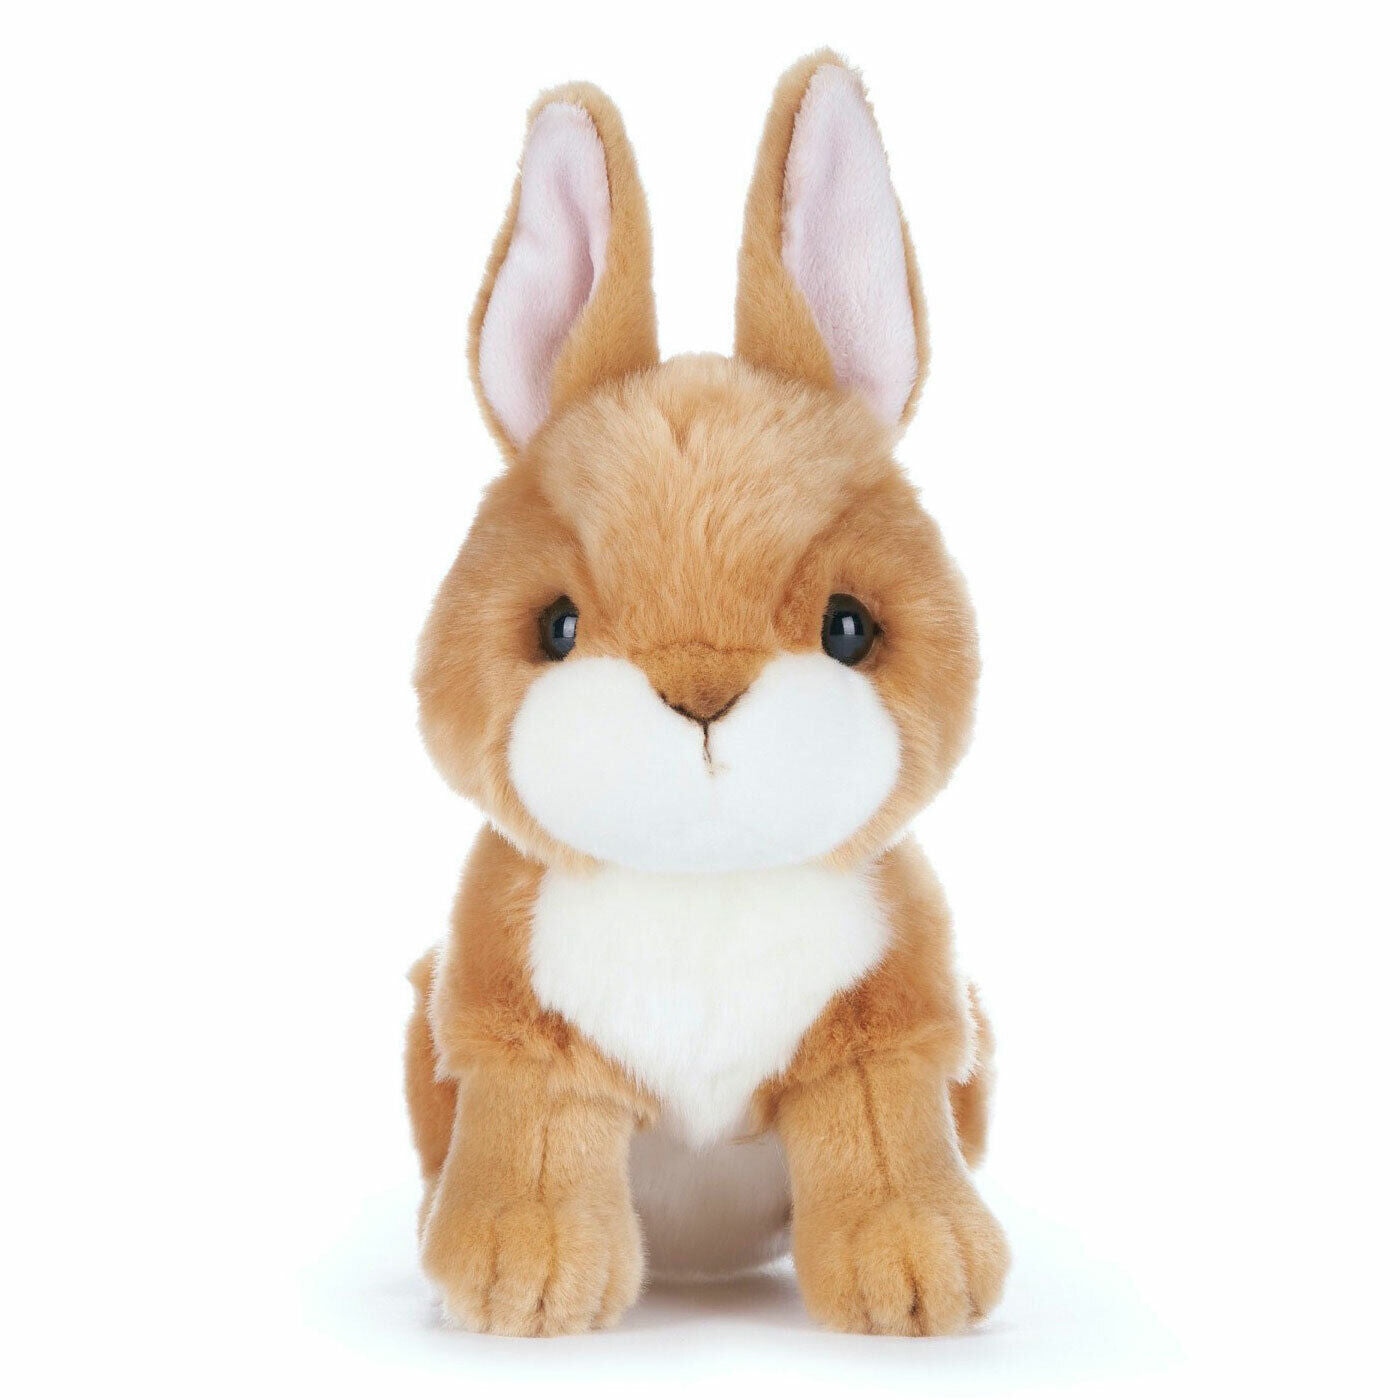 New BBC Earth Woodland Collection 10-Inch European Rabbit Figurine